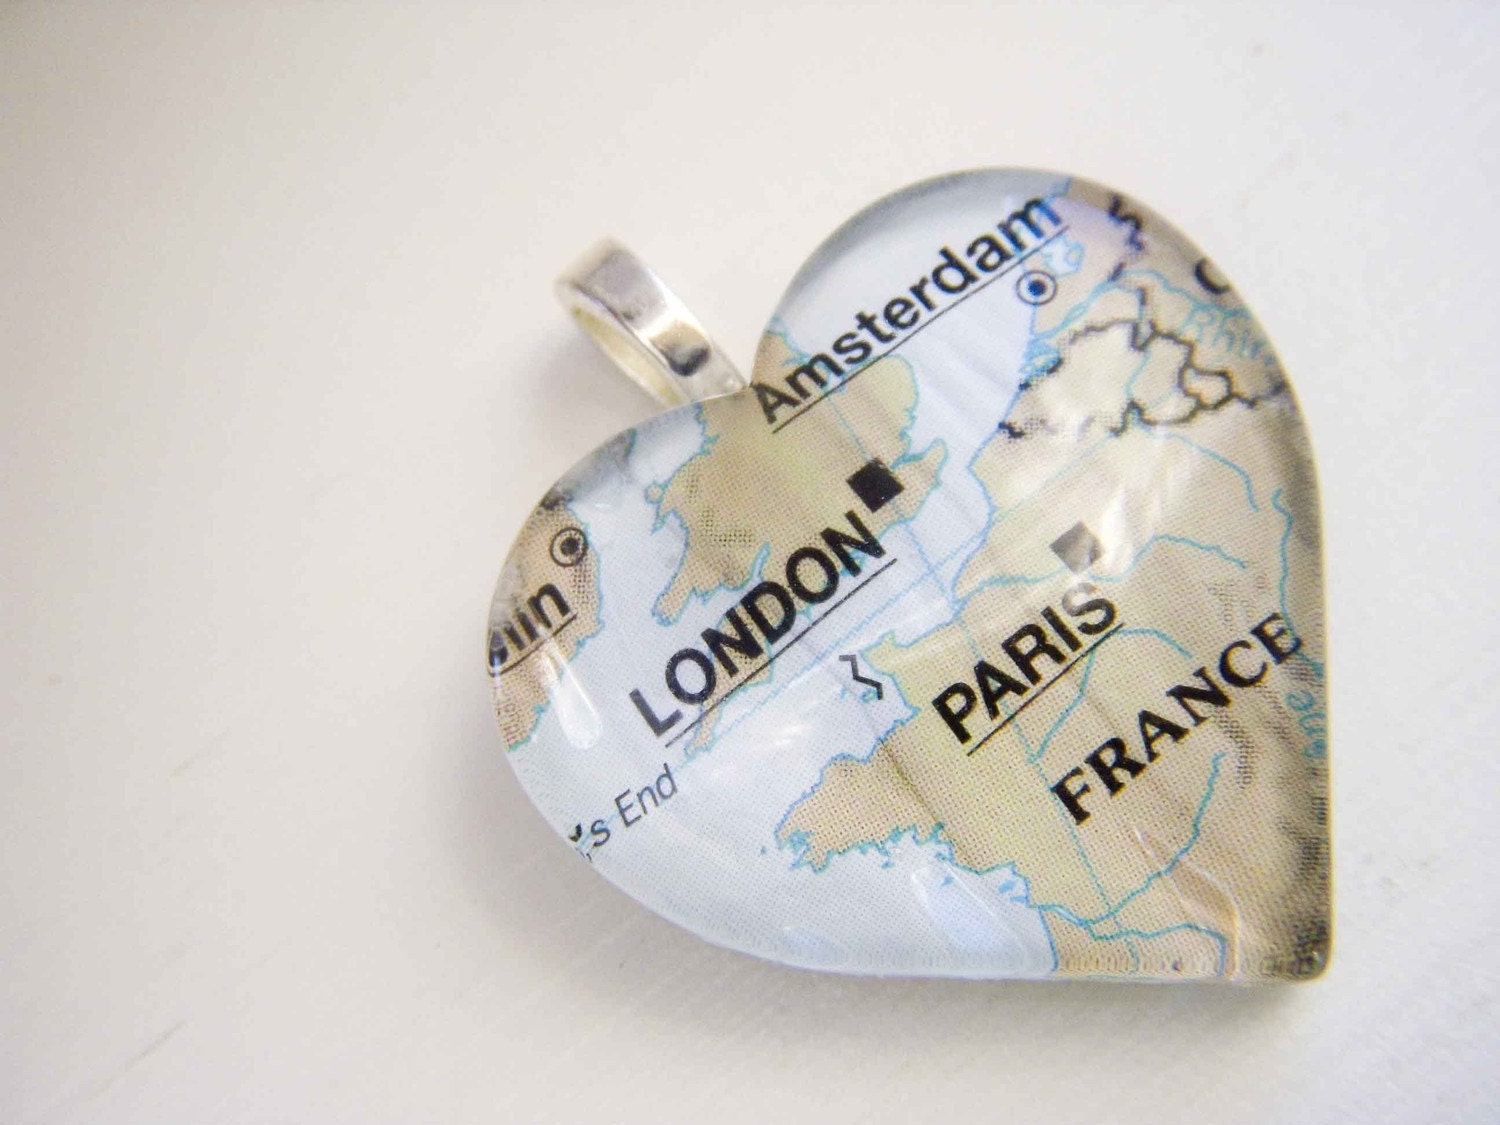 London Paris France Amsterdam Honeymoon Adventure Journey Glass Tile Pendant Necklace Ready to Ship Today